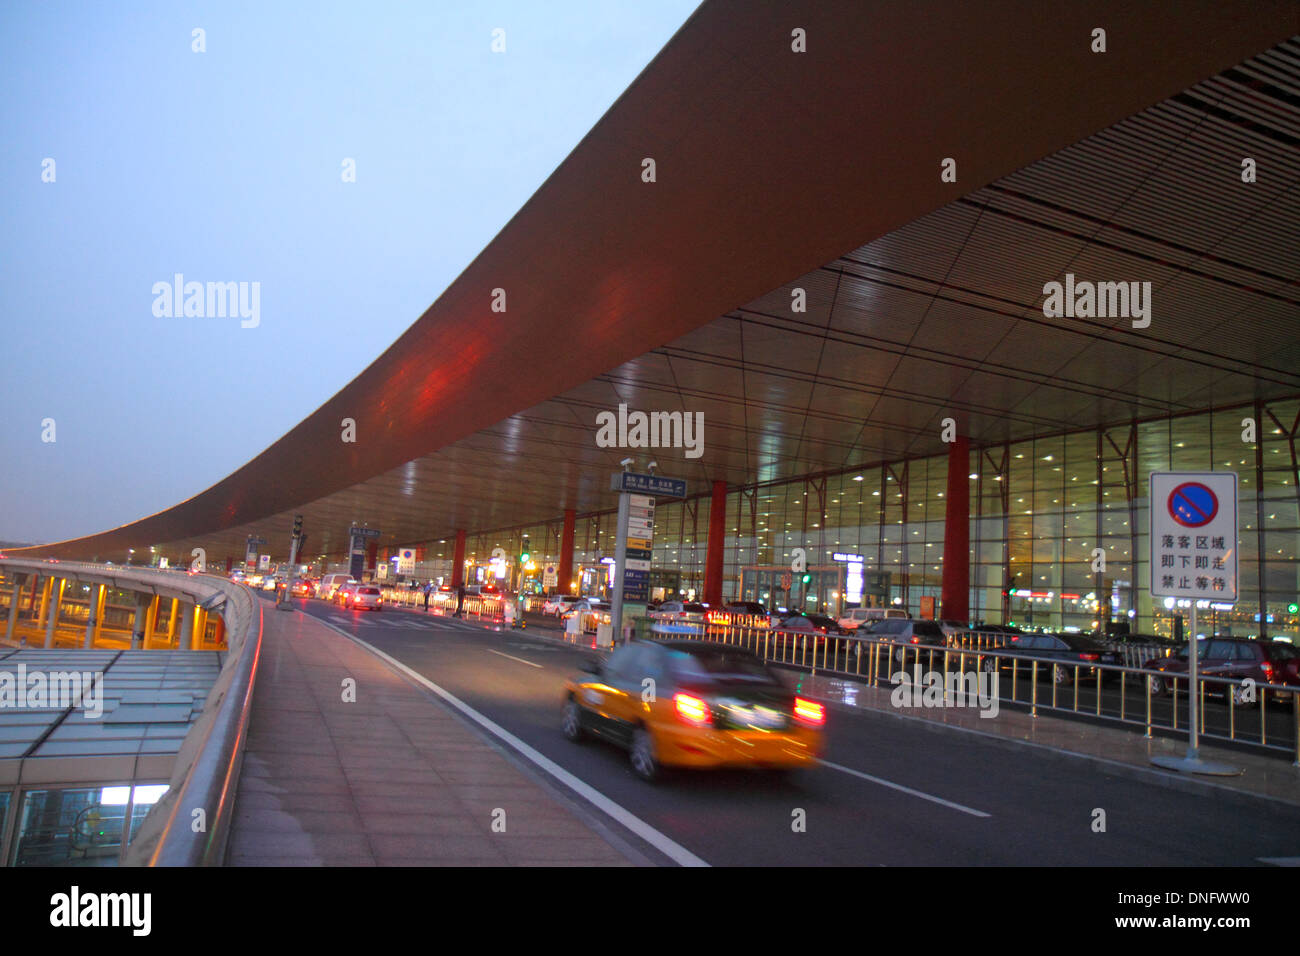 China, China, internationaler Flughafen Peking, PEK, Terminal 3, Außenfassade, China130916026 Stockfoto